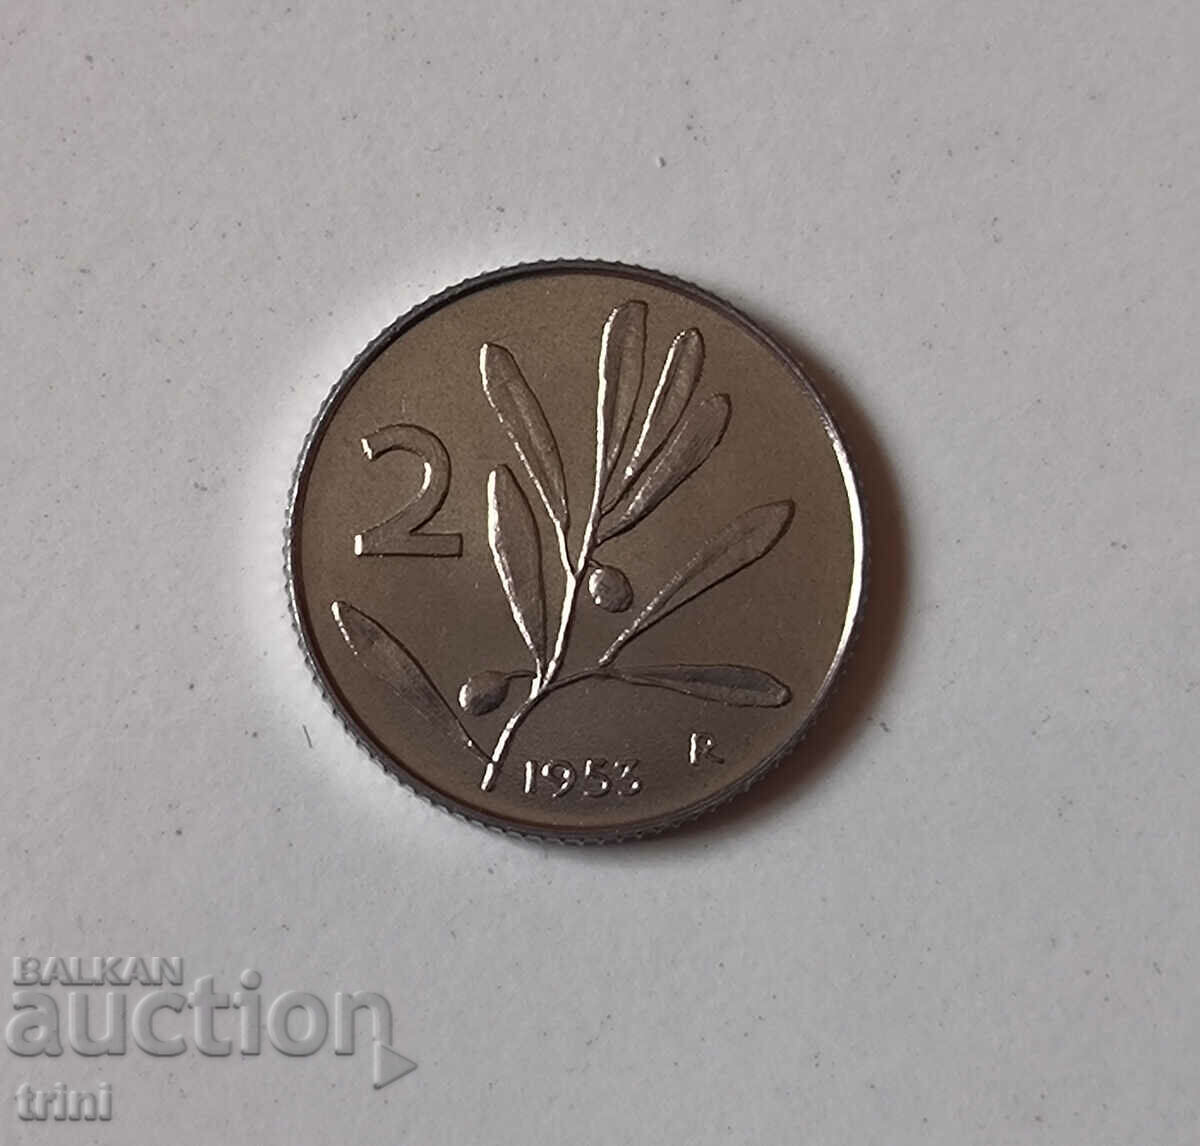 Italia 2 lire 1953 anul g102